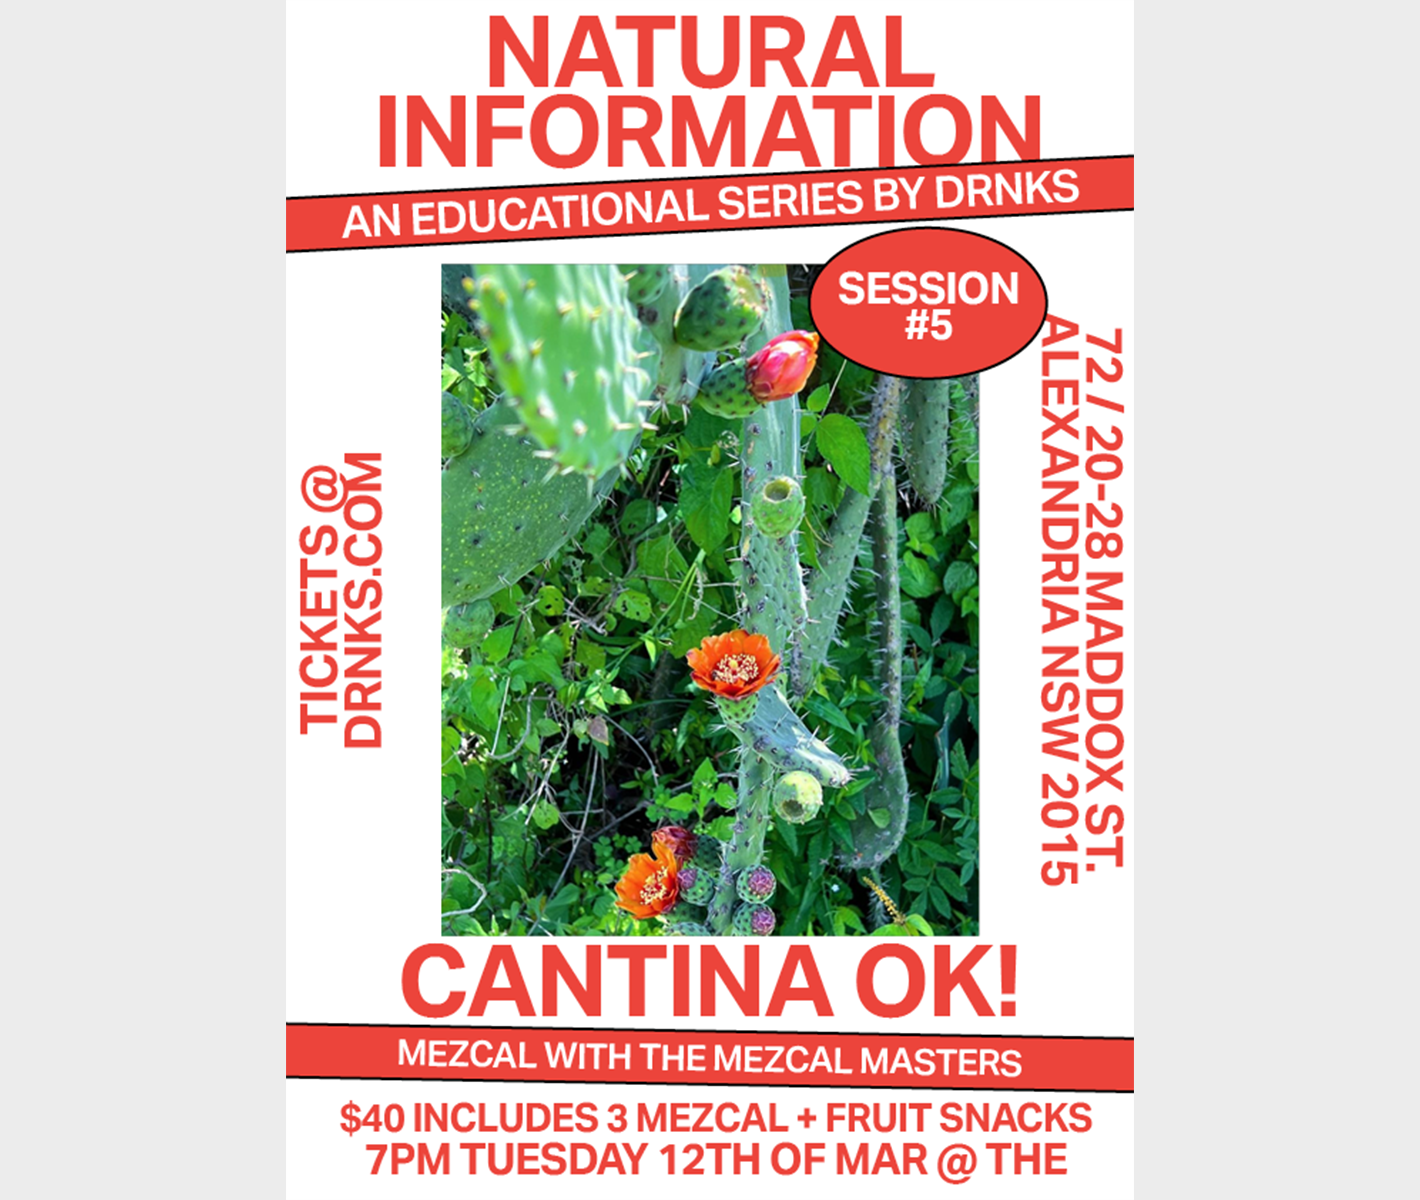 Natural Information Session #5 - Cantina OK!